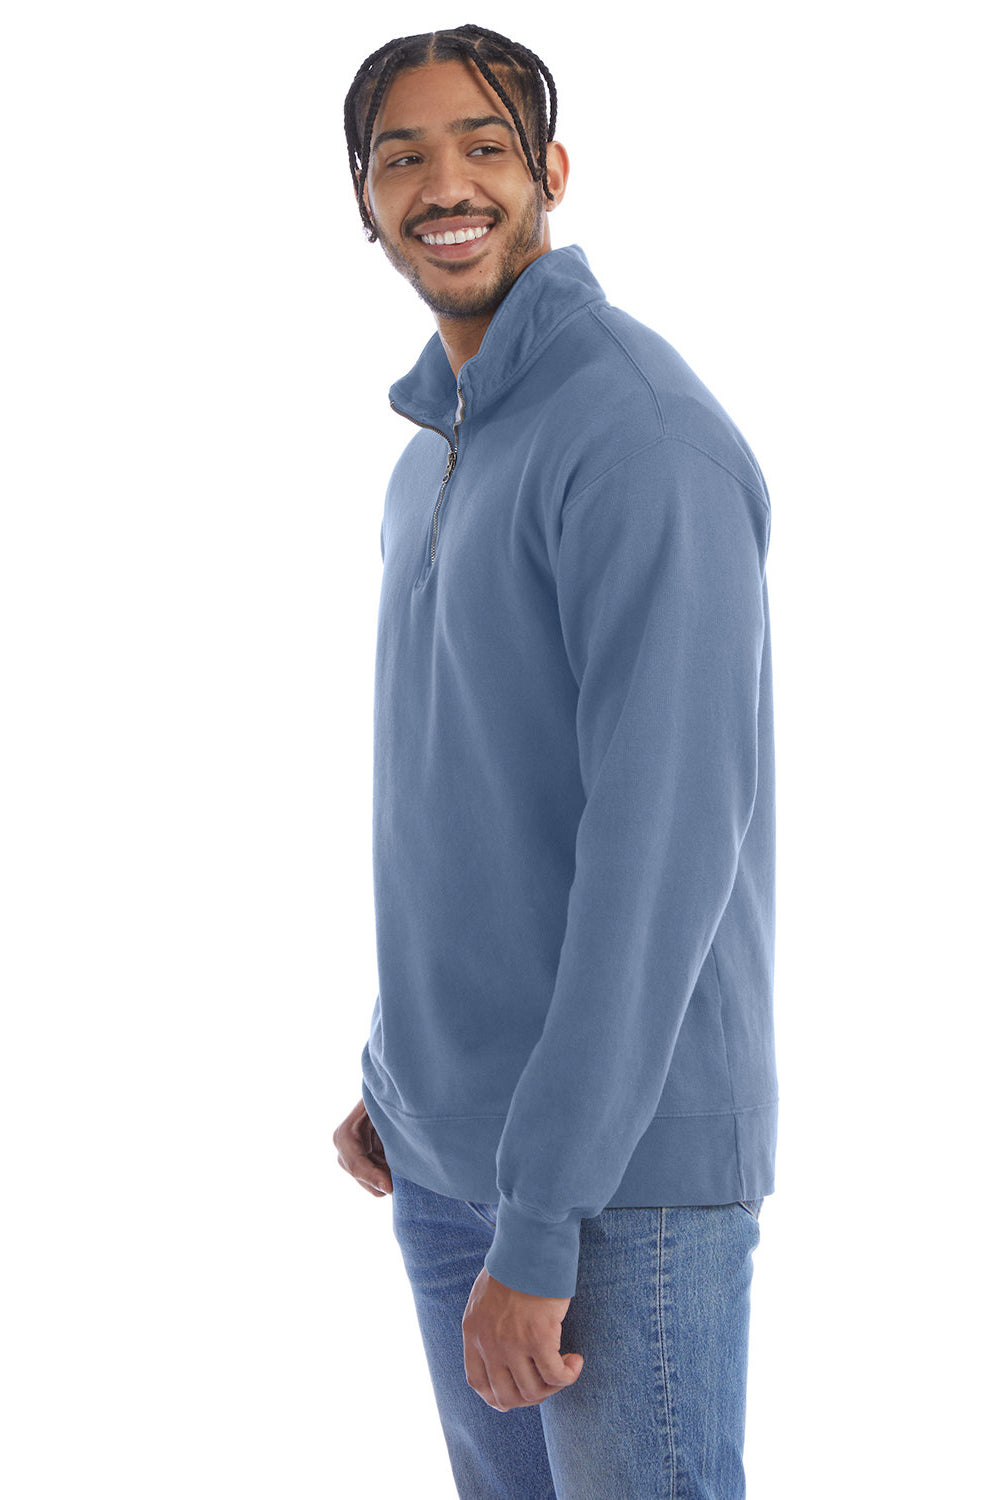 ComfortWash by Hanes GDH425 Mens 1/4 Zip Sweatshirt Saltwater Blue 3Q